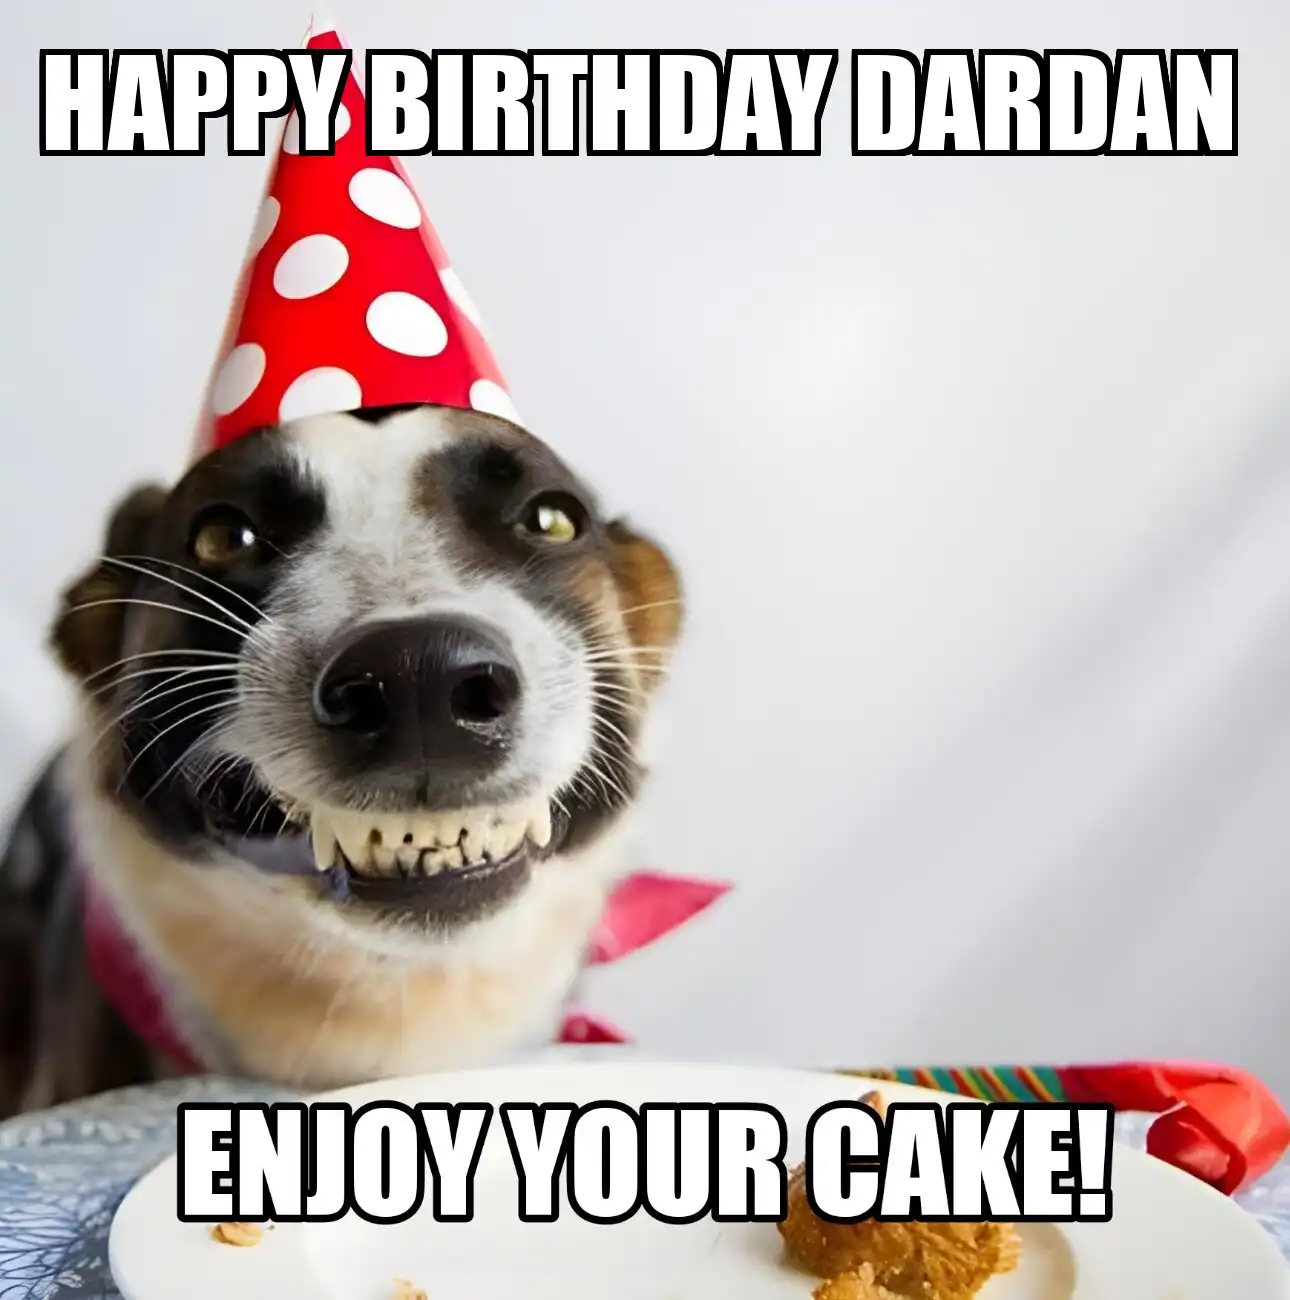 Happy Birthday Dardan Enjoy Your Cake Dog Meme